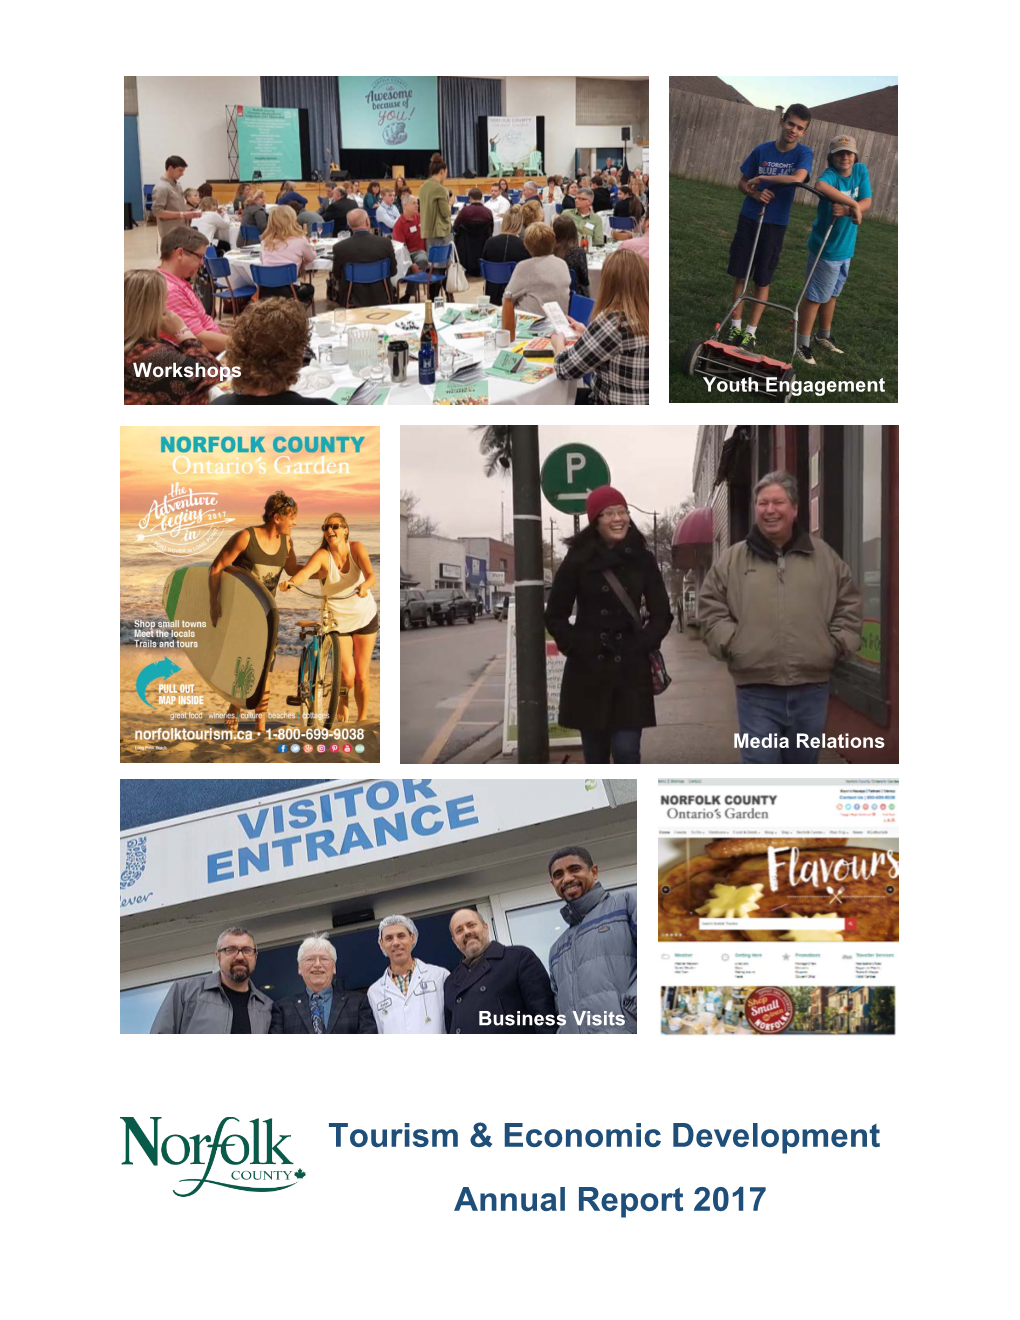 Tourism & Economic Development Annual Report 2017